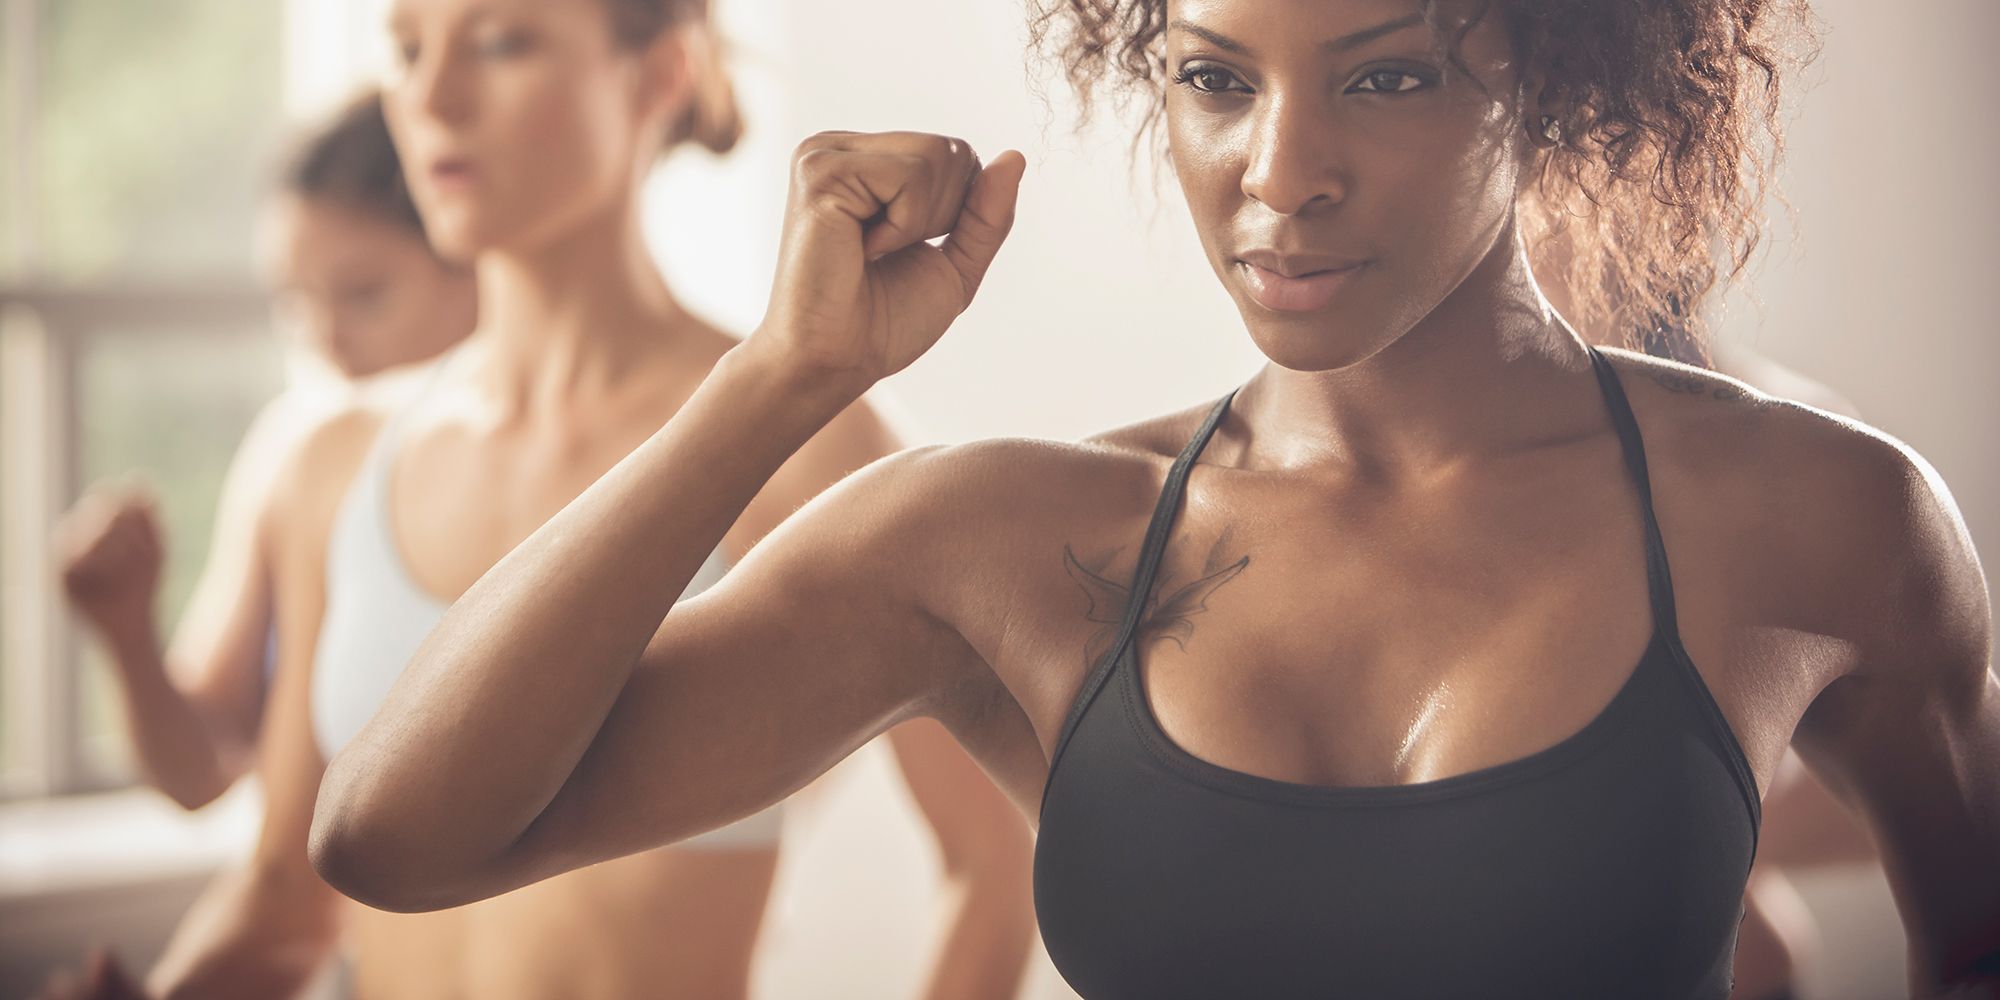 Four ways to make exercising easier if you've got big boobs